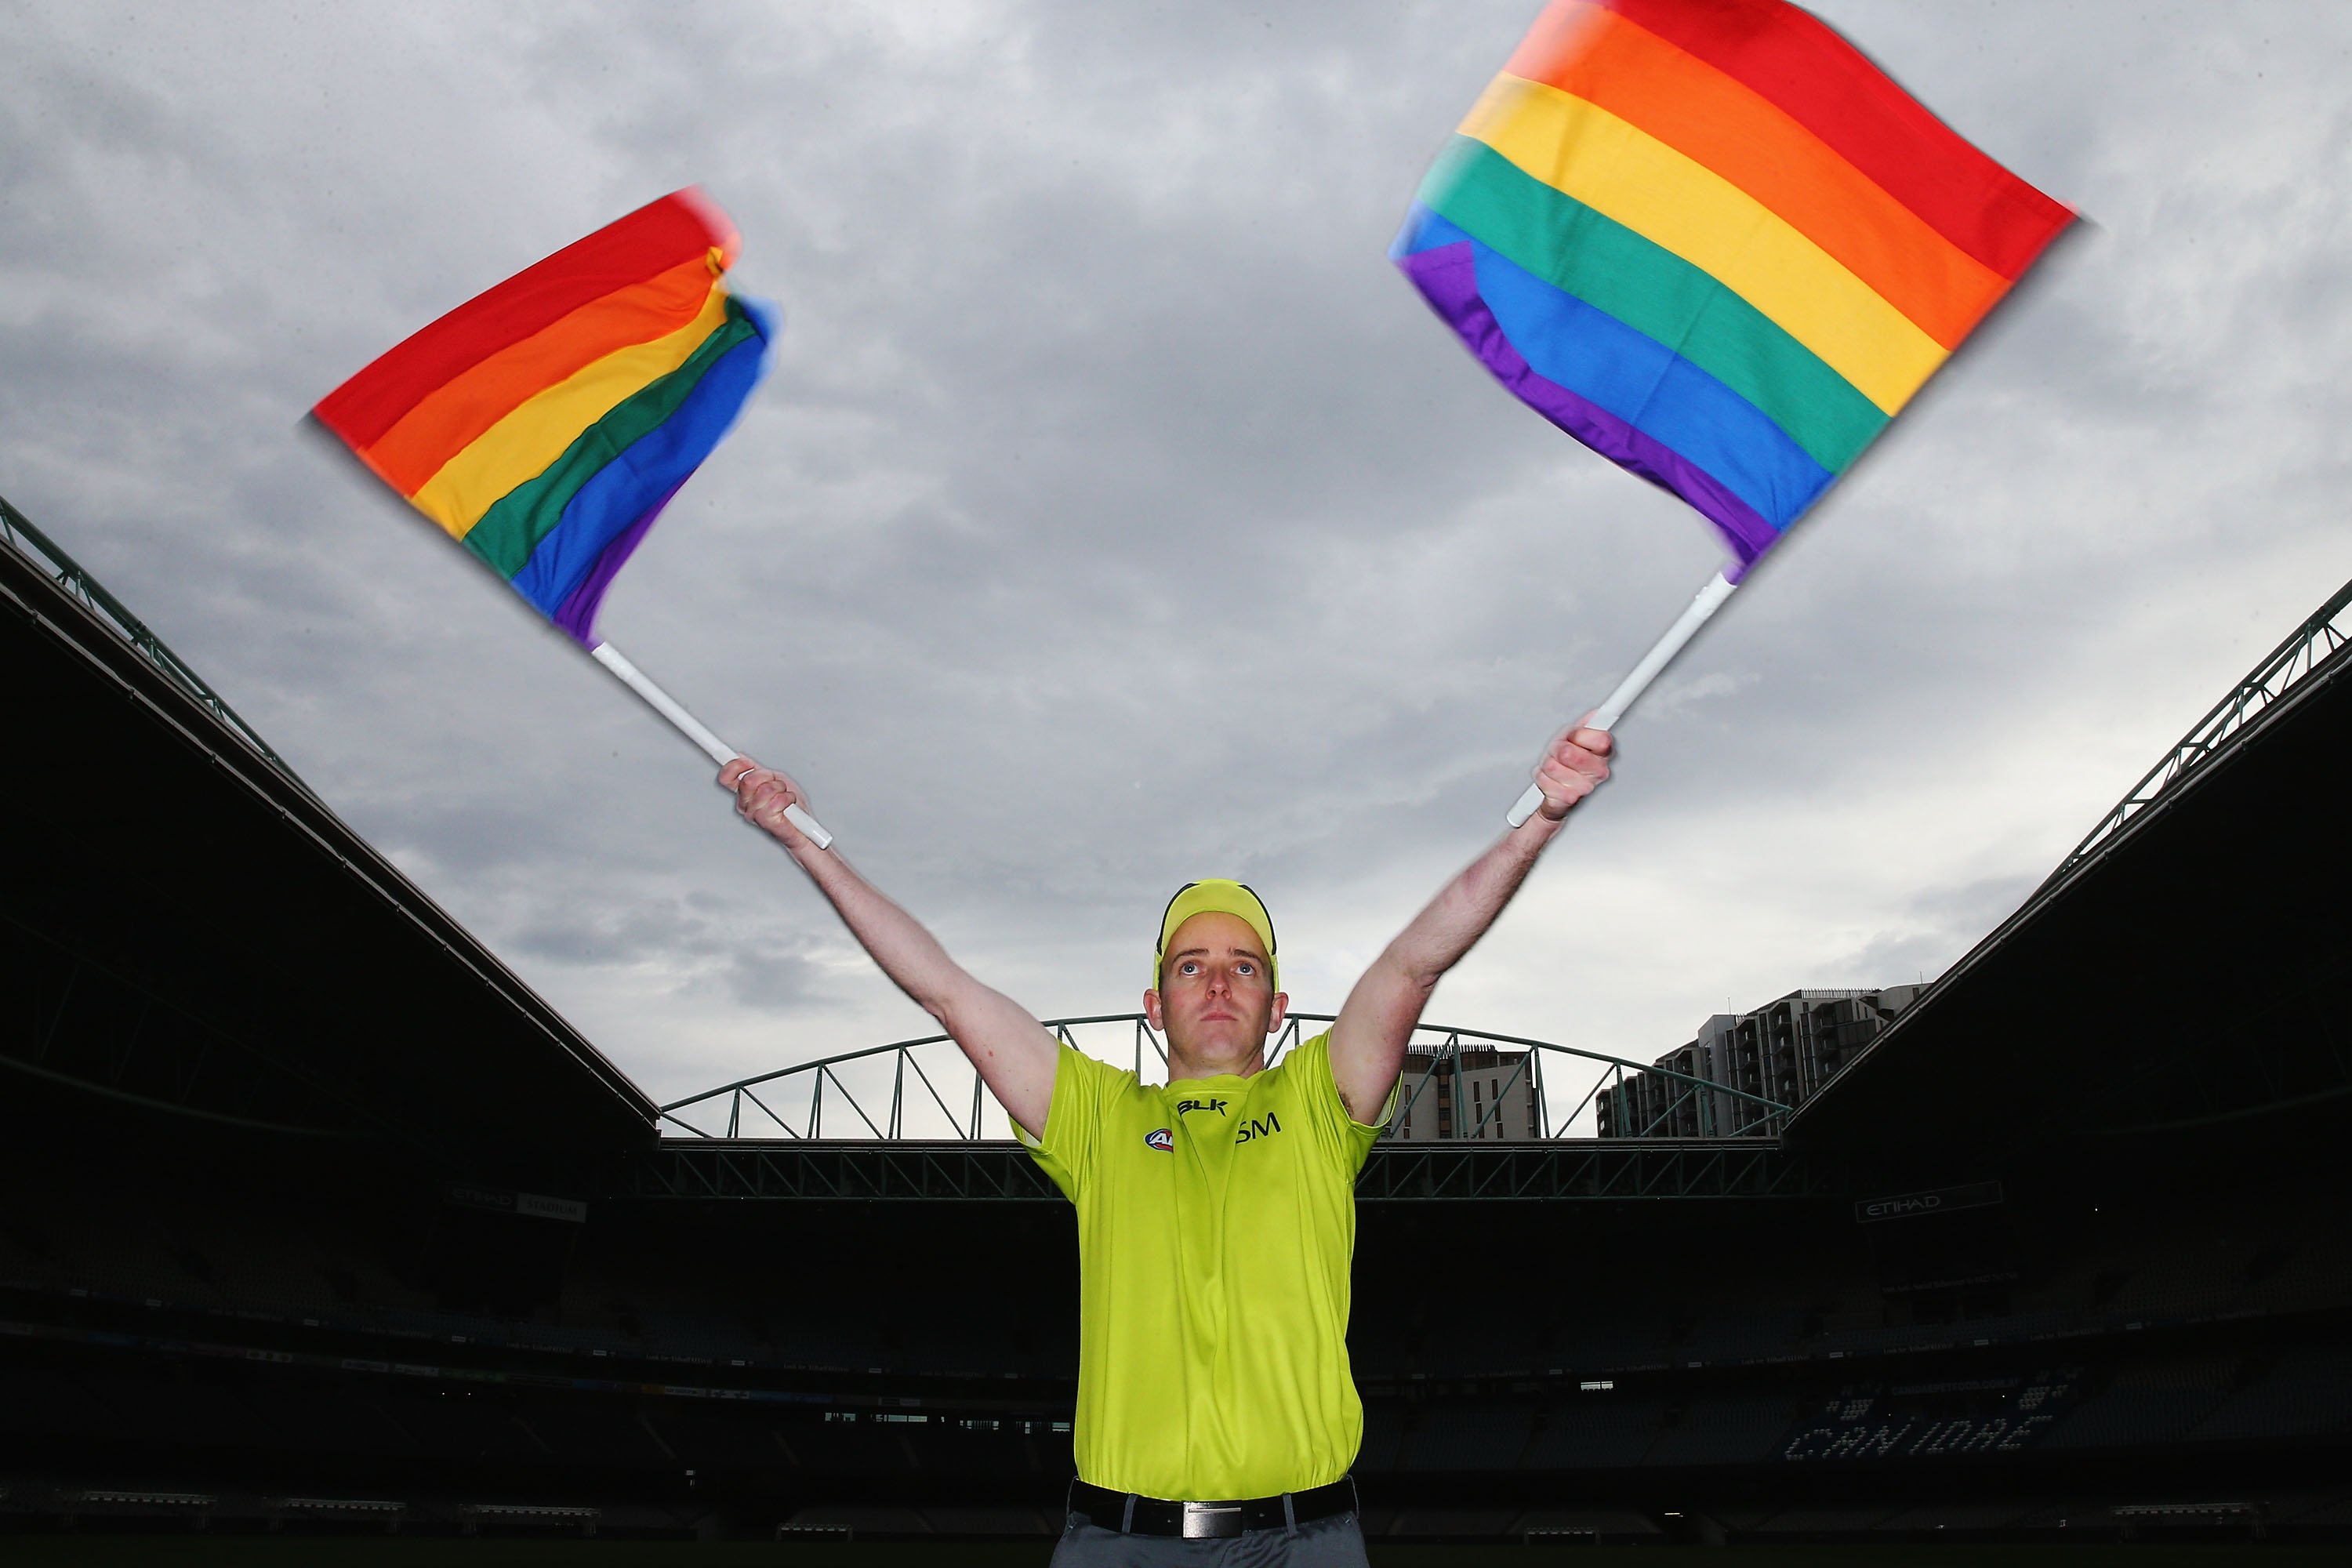 Sydney Swans full of LGBTI Pride